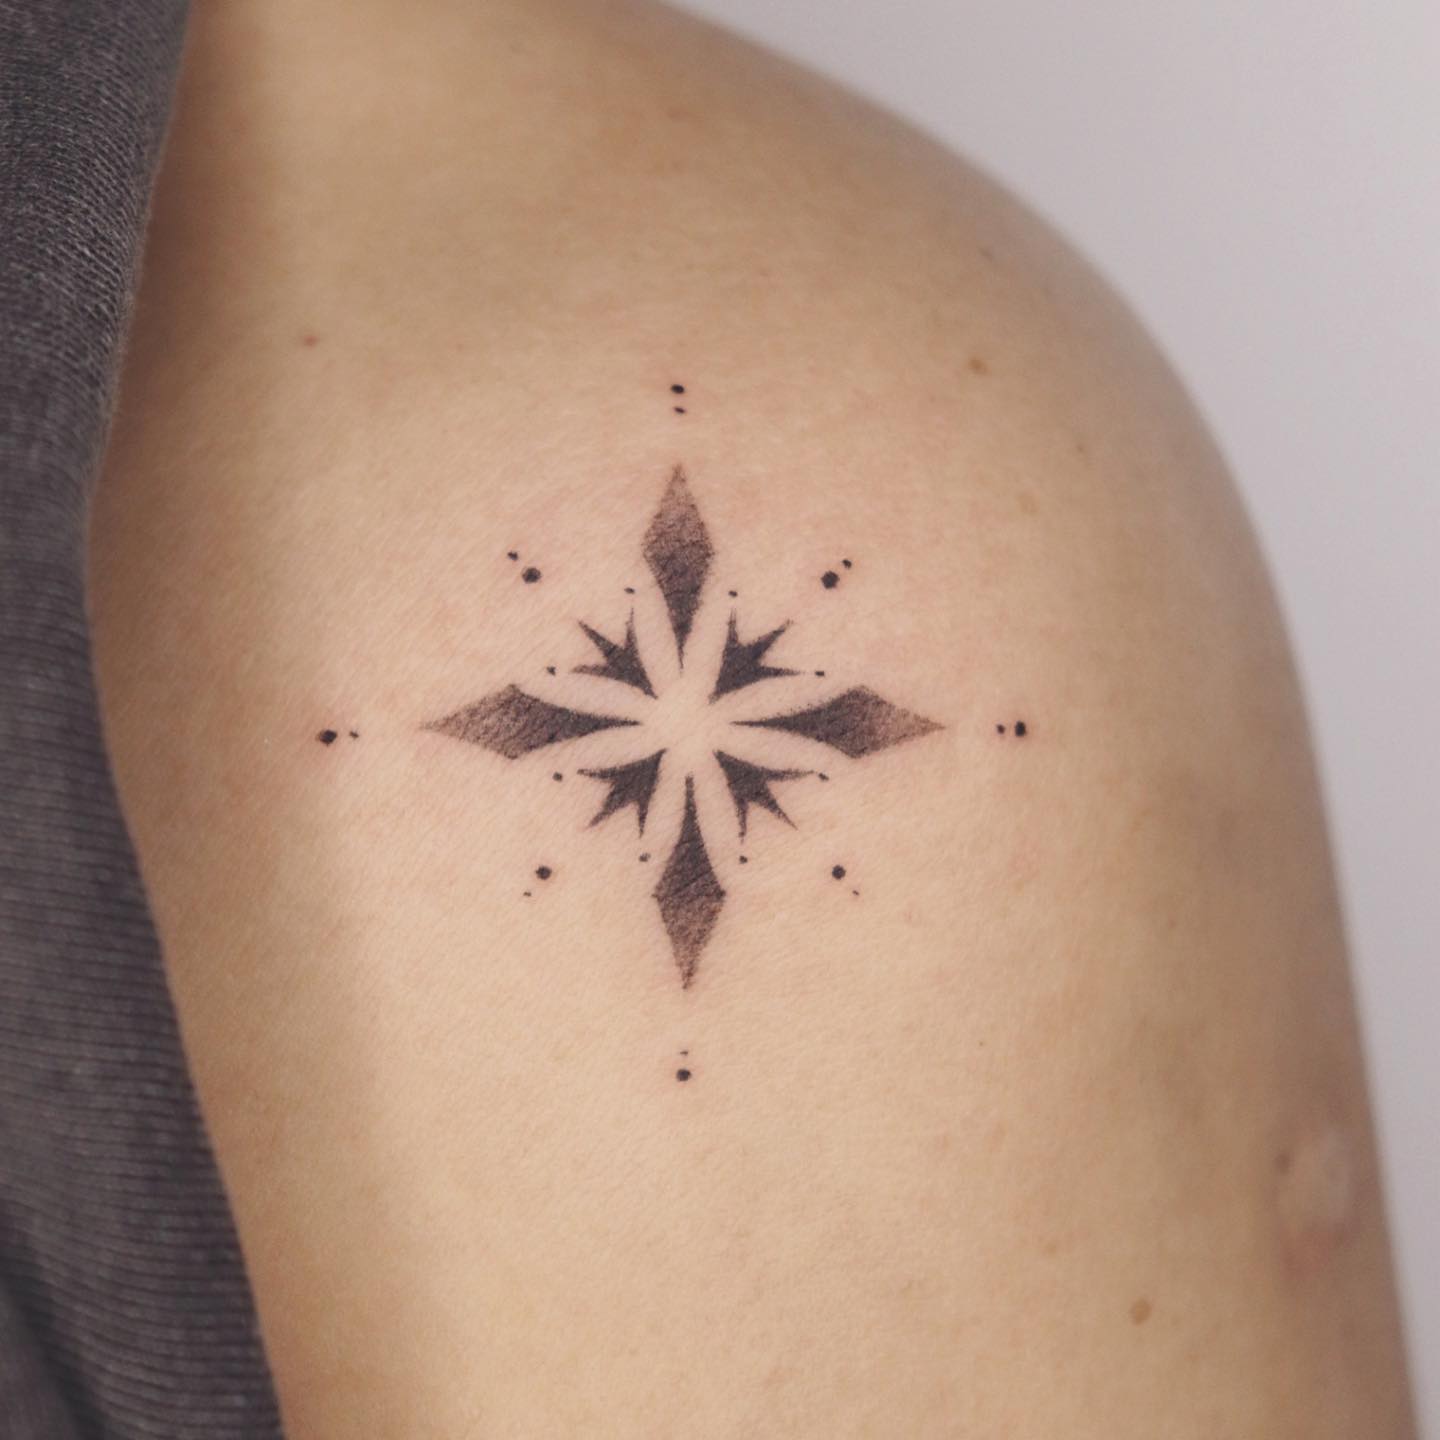 Snowflake tattoo by kissami ink